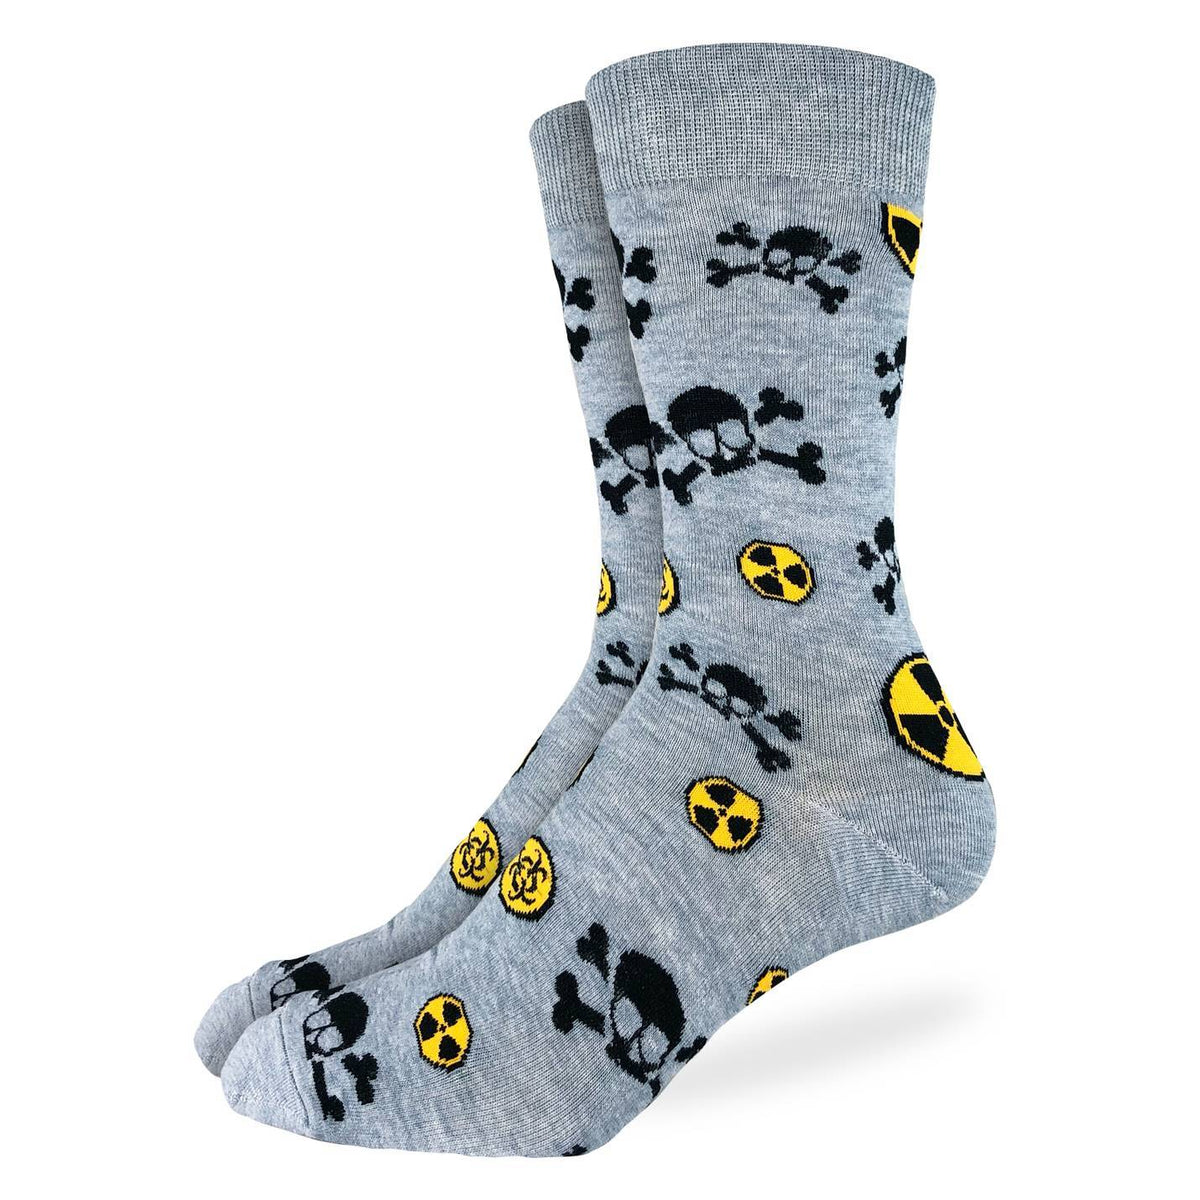 Men's Radioactive & Biological Hazard Socks